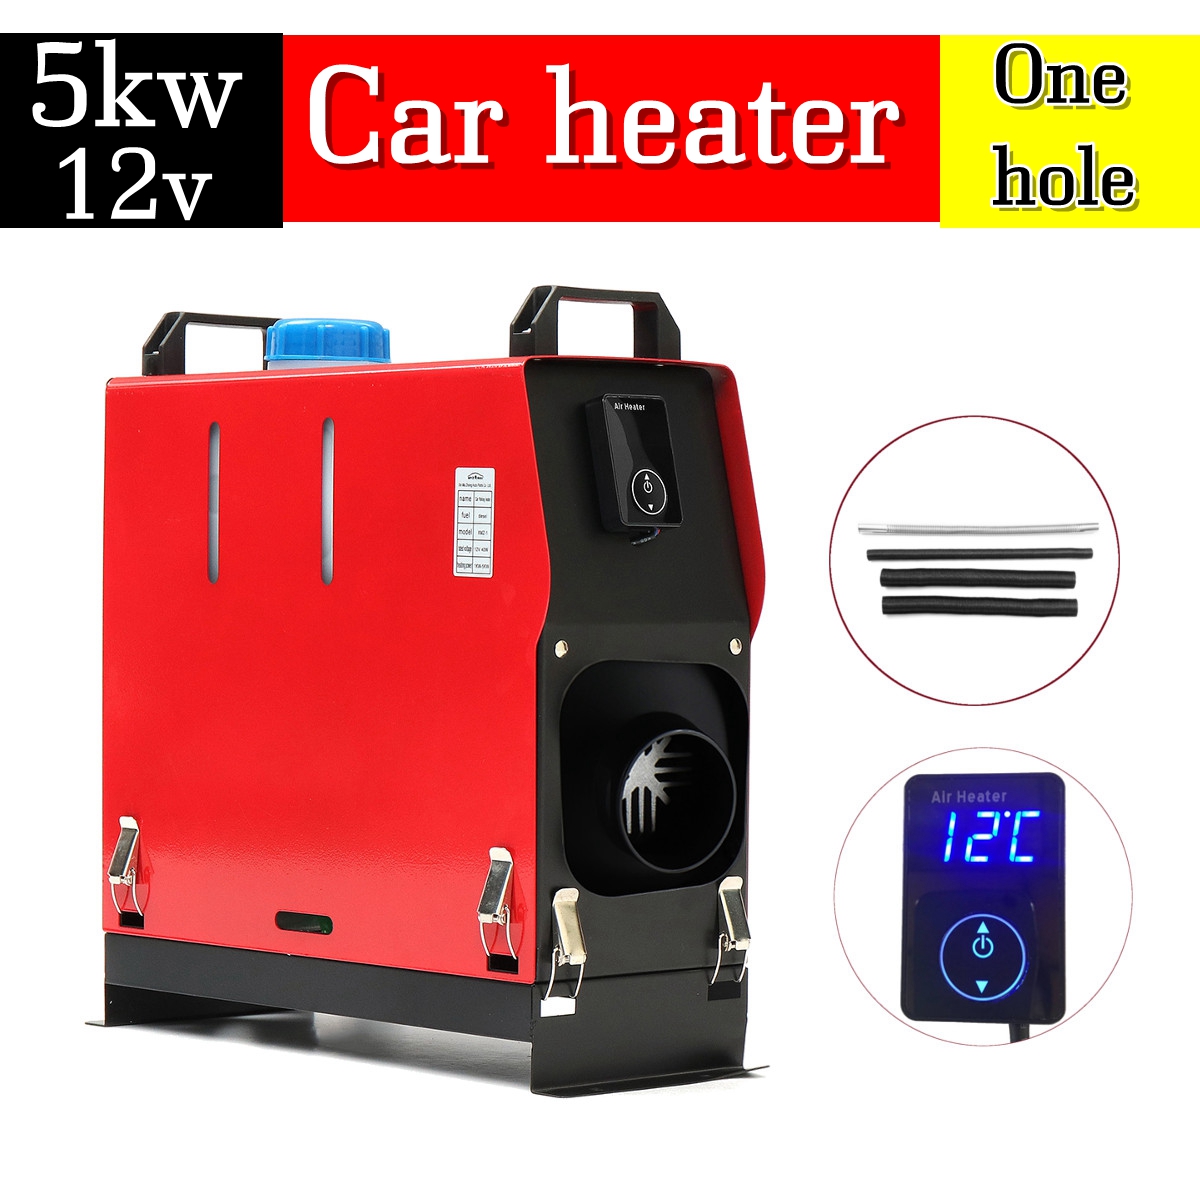 car heater